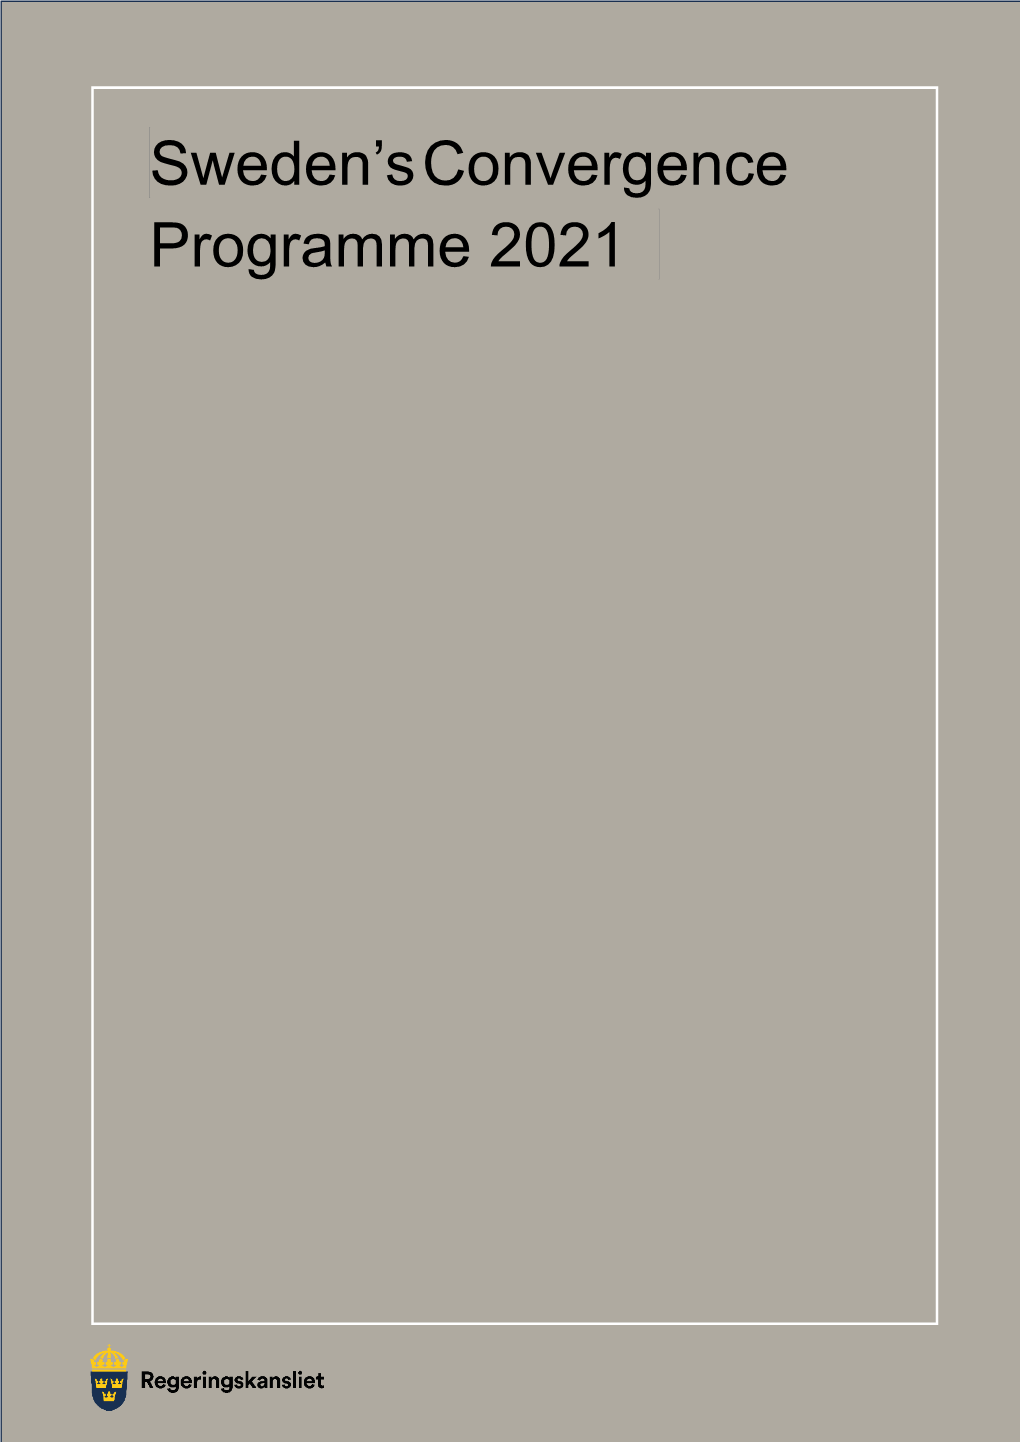 Sweden'sconvergence Programme 2021